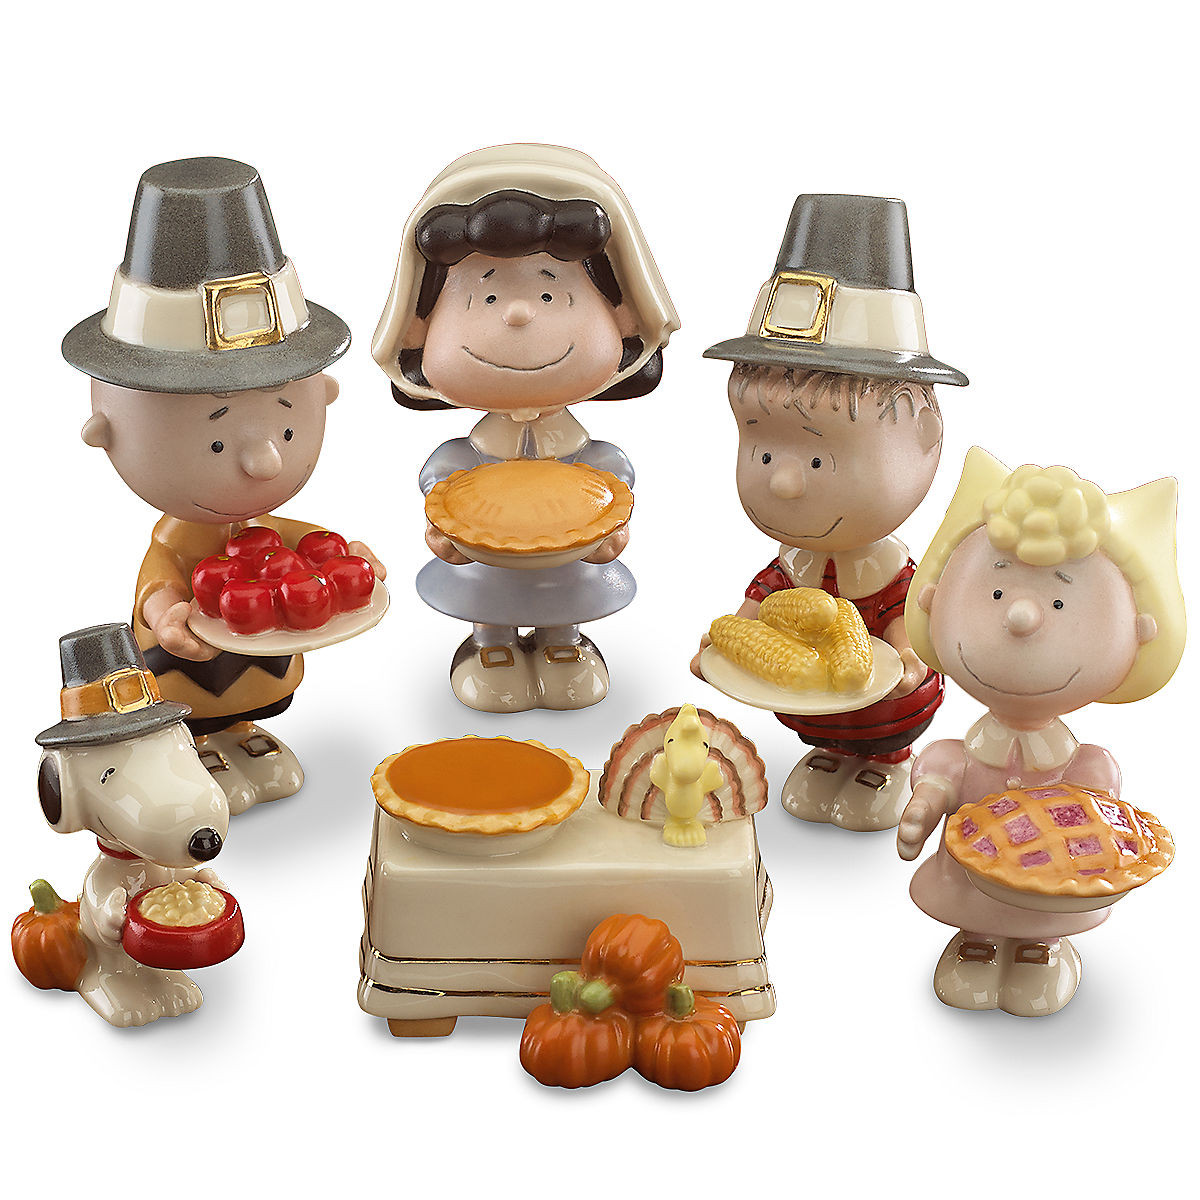 Turkey Figurines Thanksgiving
 PEANUTS 6 pc Thanksgiving Figurine Set